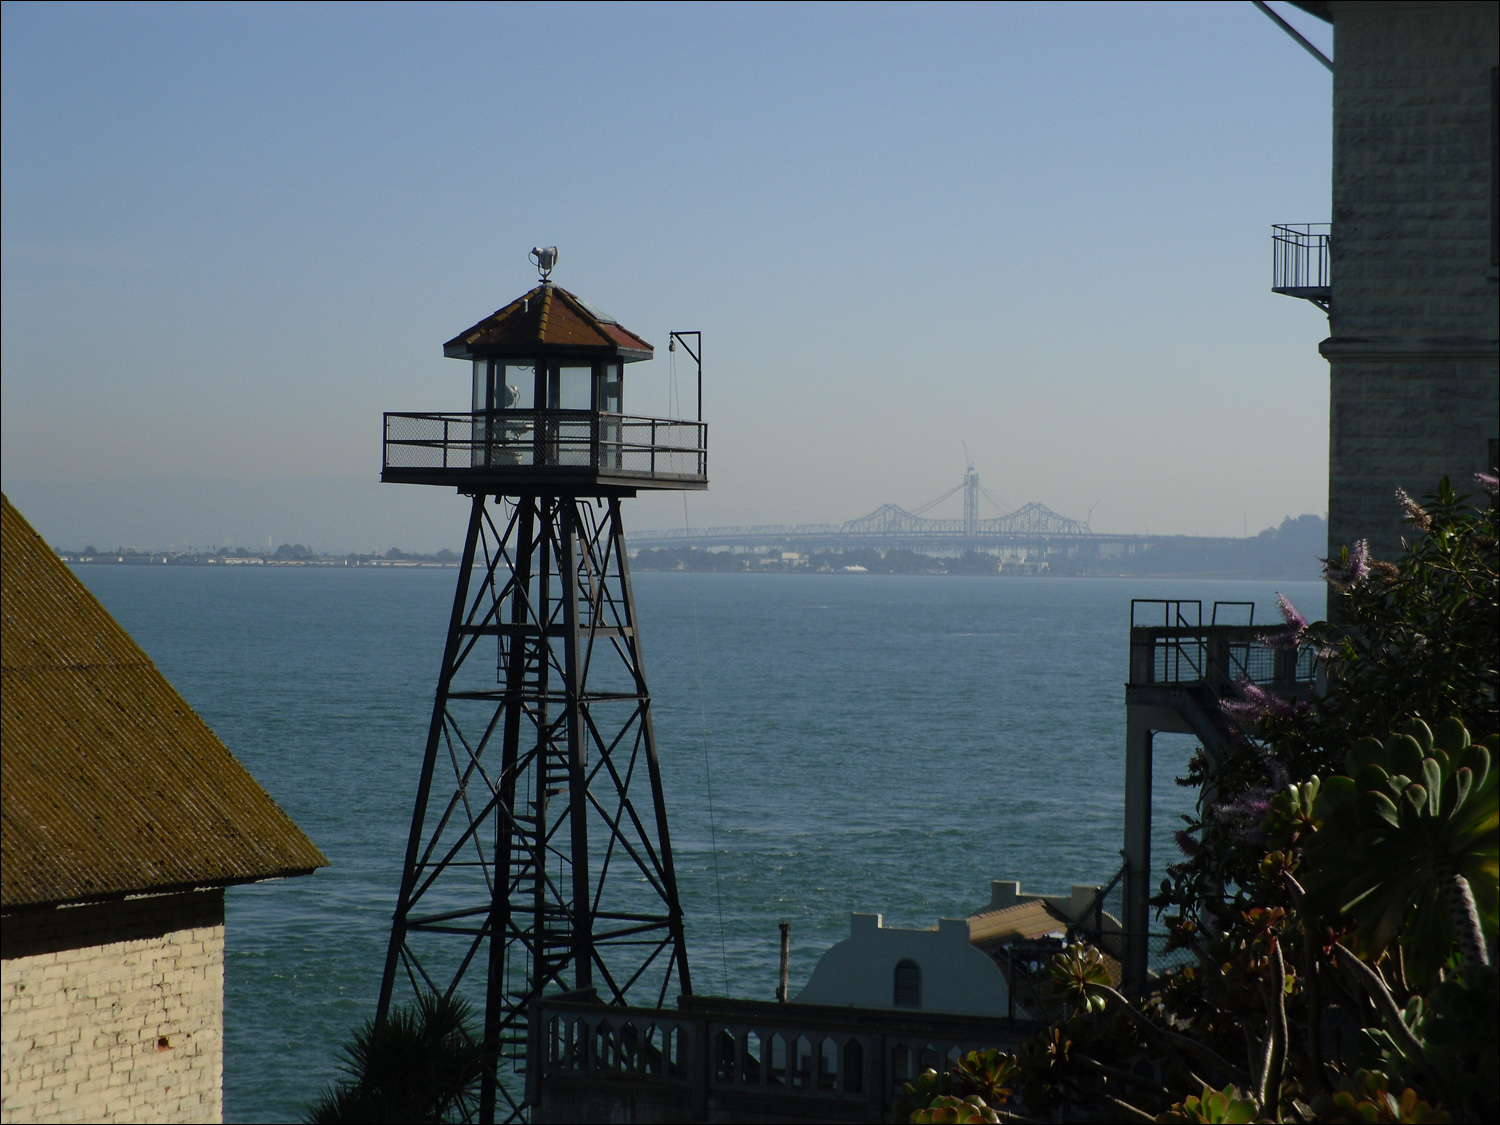 Bay Bridge as seen from Alcatraz